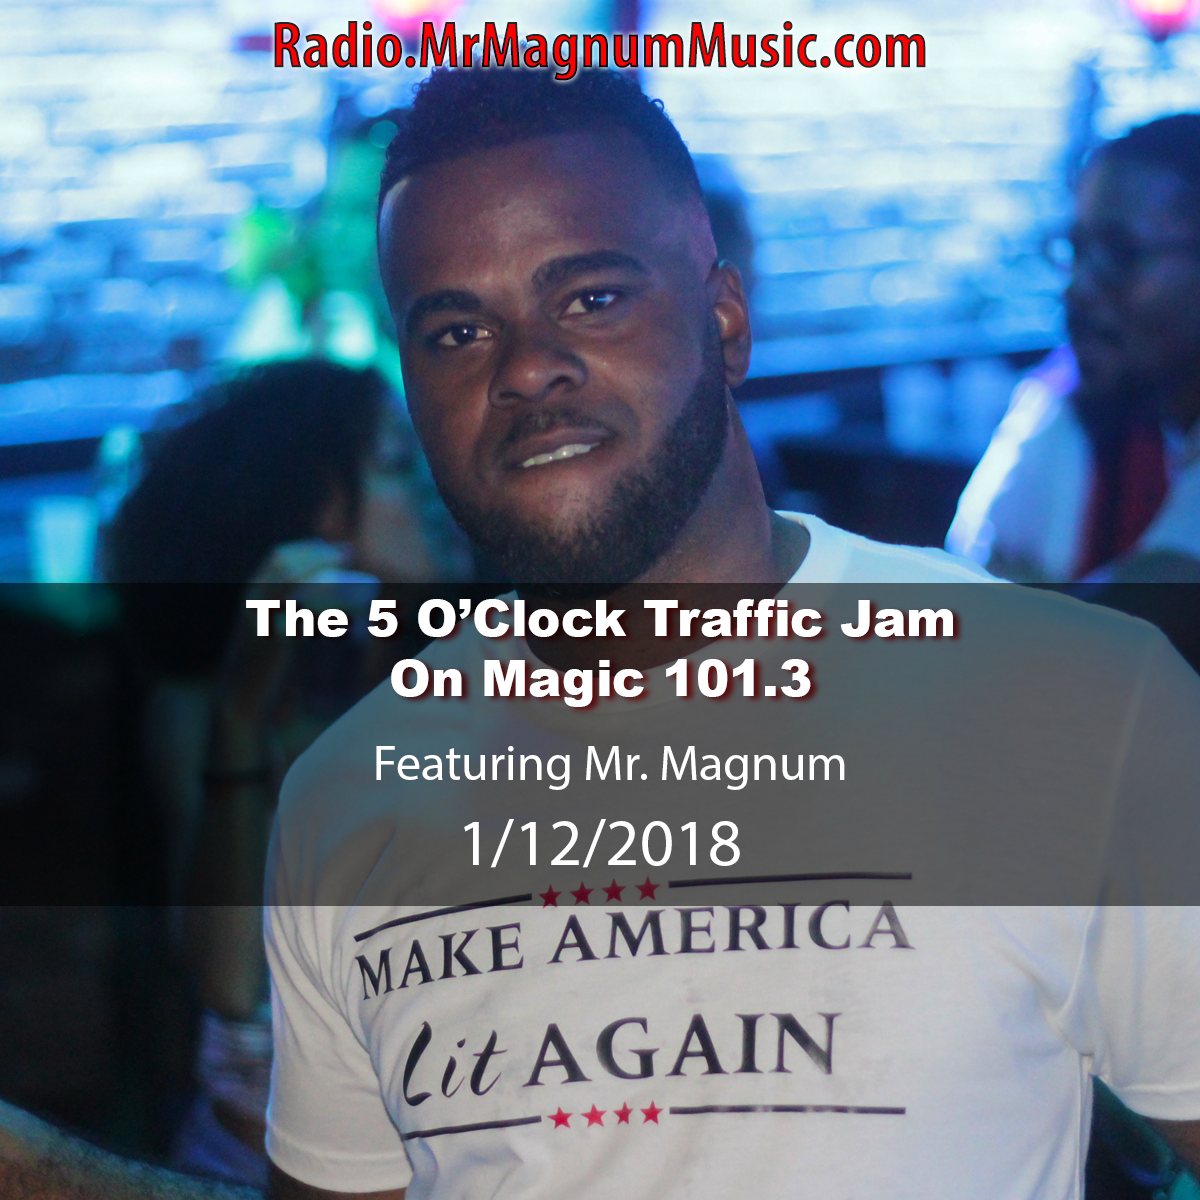 The 5 O'Clock Traffic Jam 20180112 featuring Gainesville's #1 DJ, Mr. Magnum on Magic 101.3